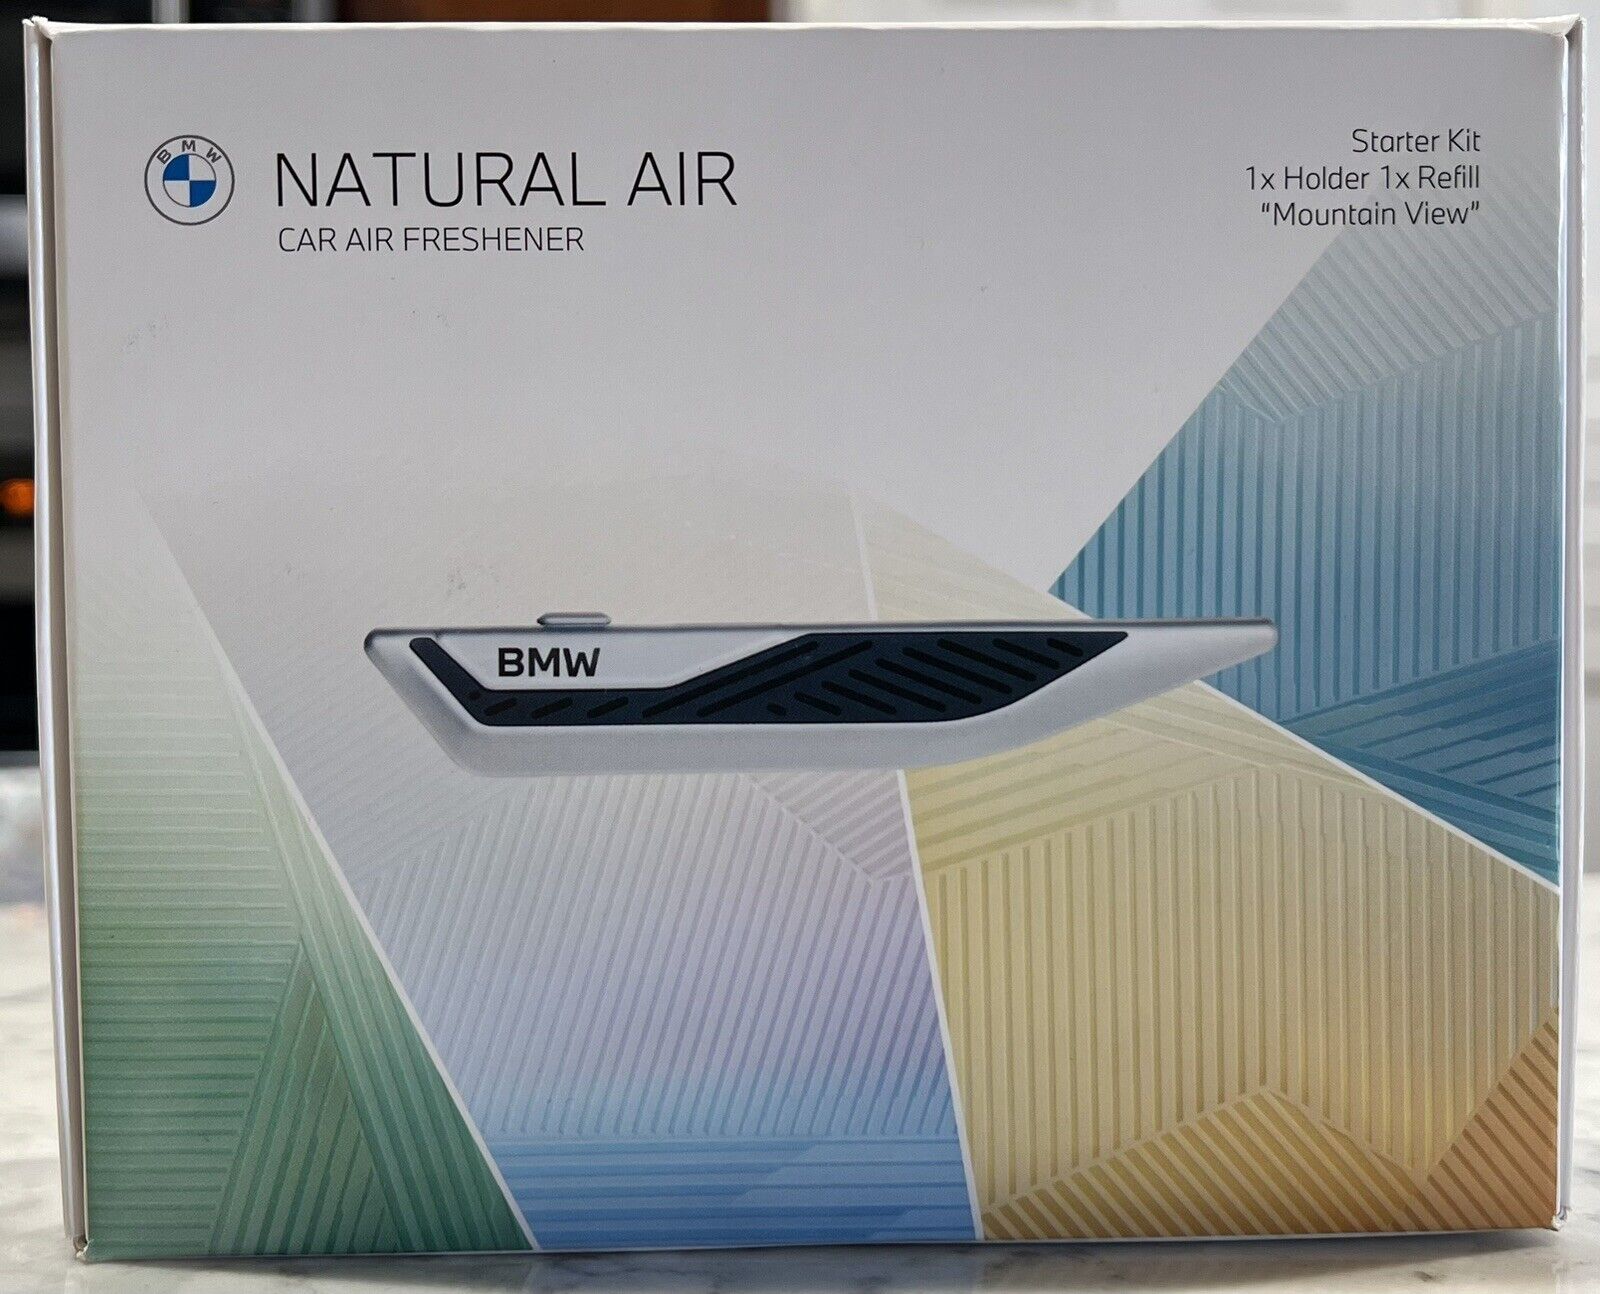 BMW  NATURAL AIR Car Air Freshener Starter  Kit Mountain View Scent OEM